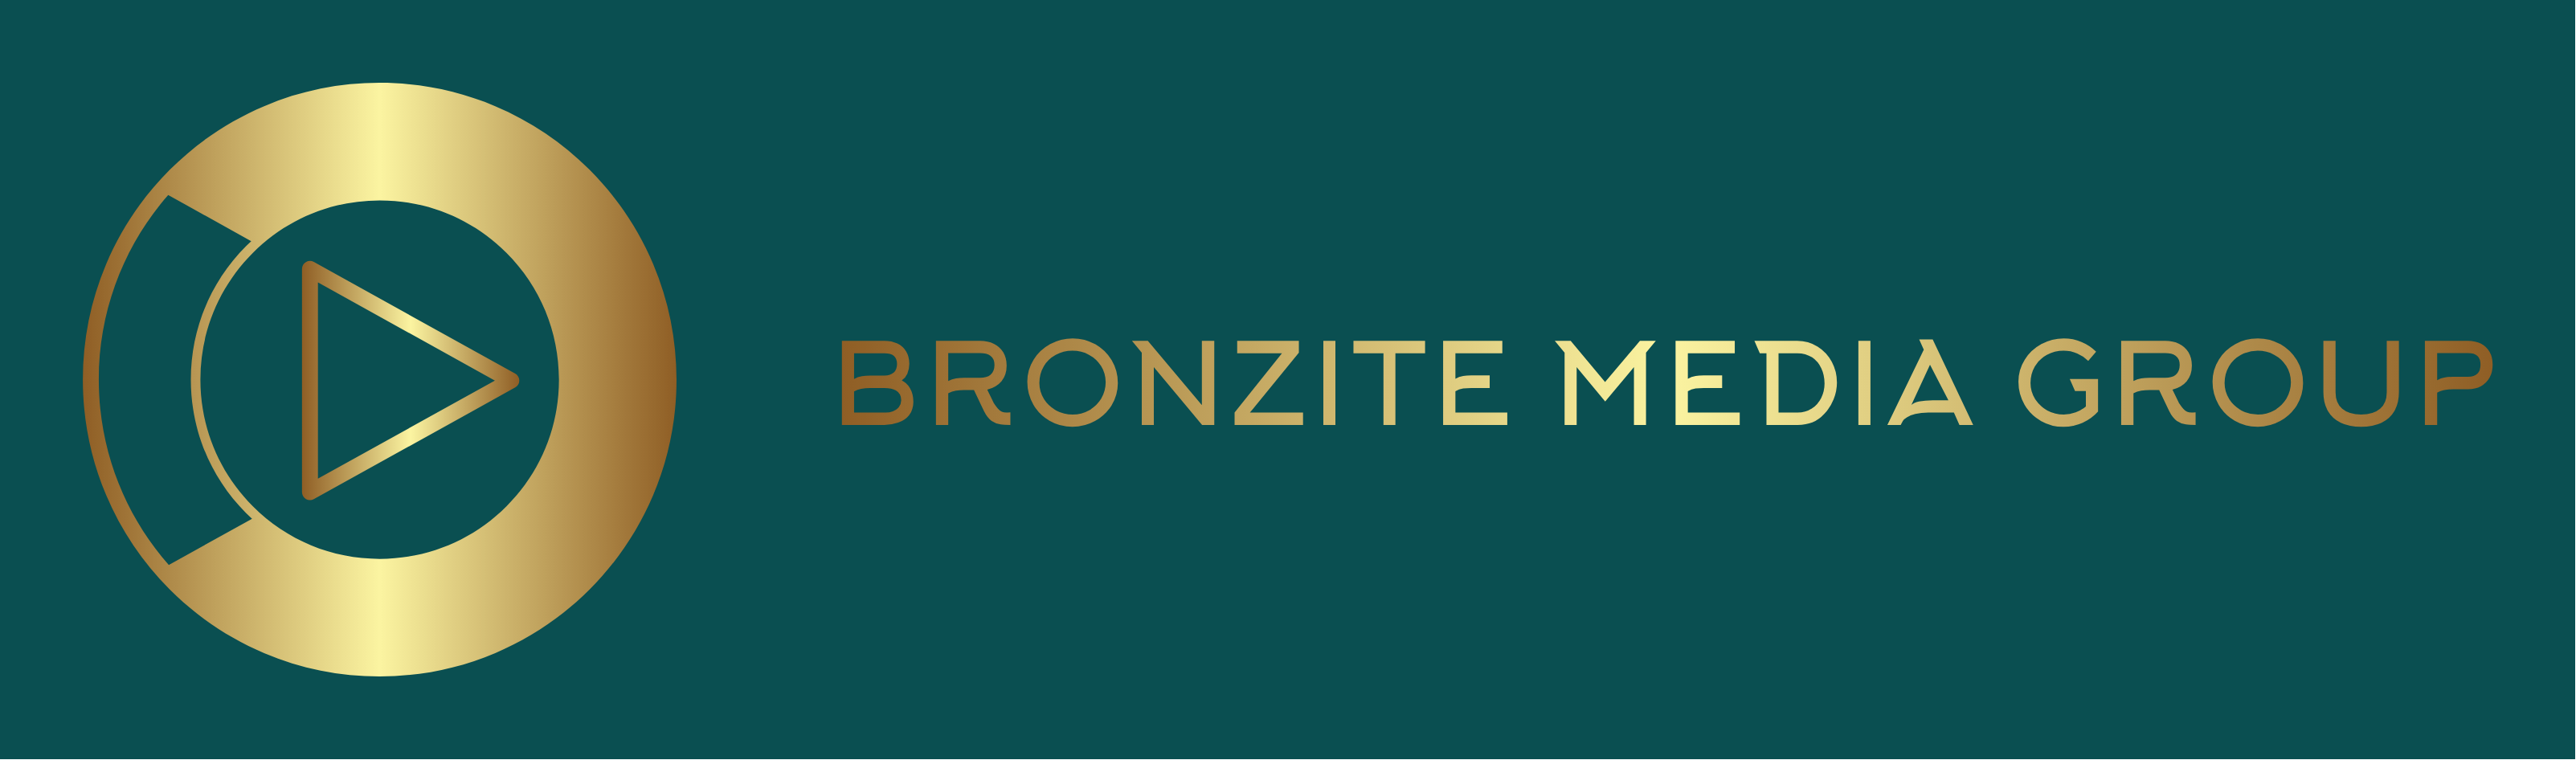 Bronzite Media Group Logo